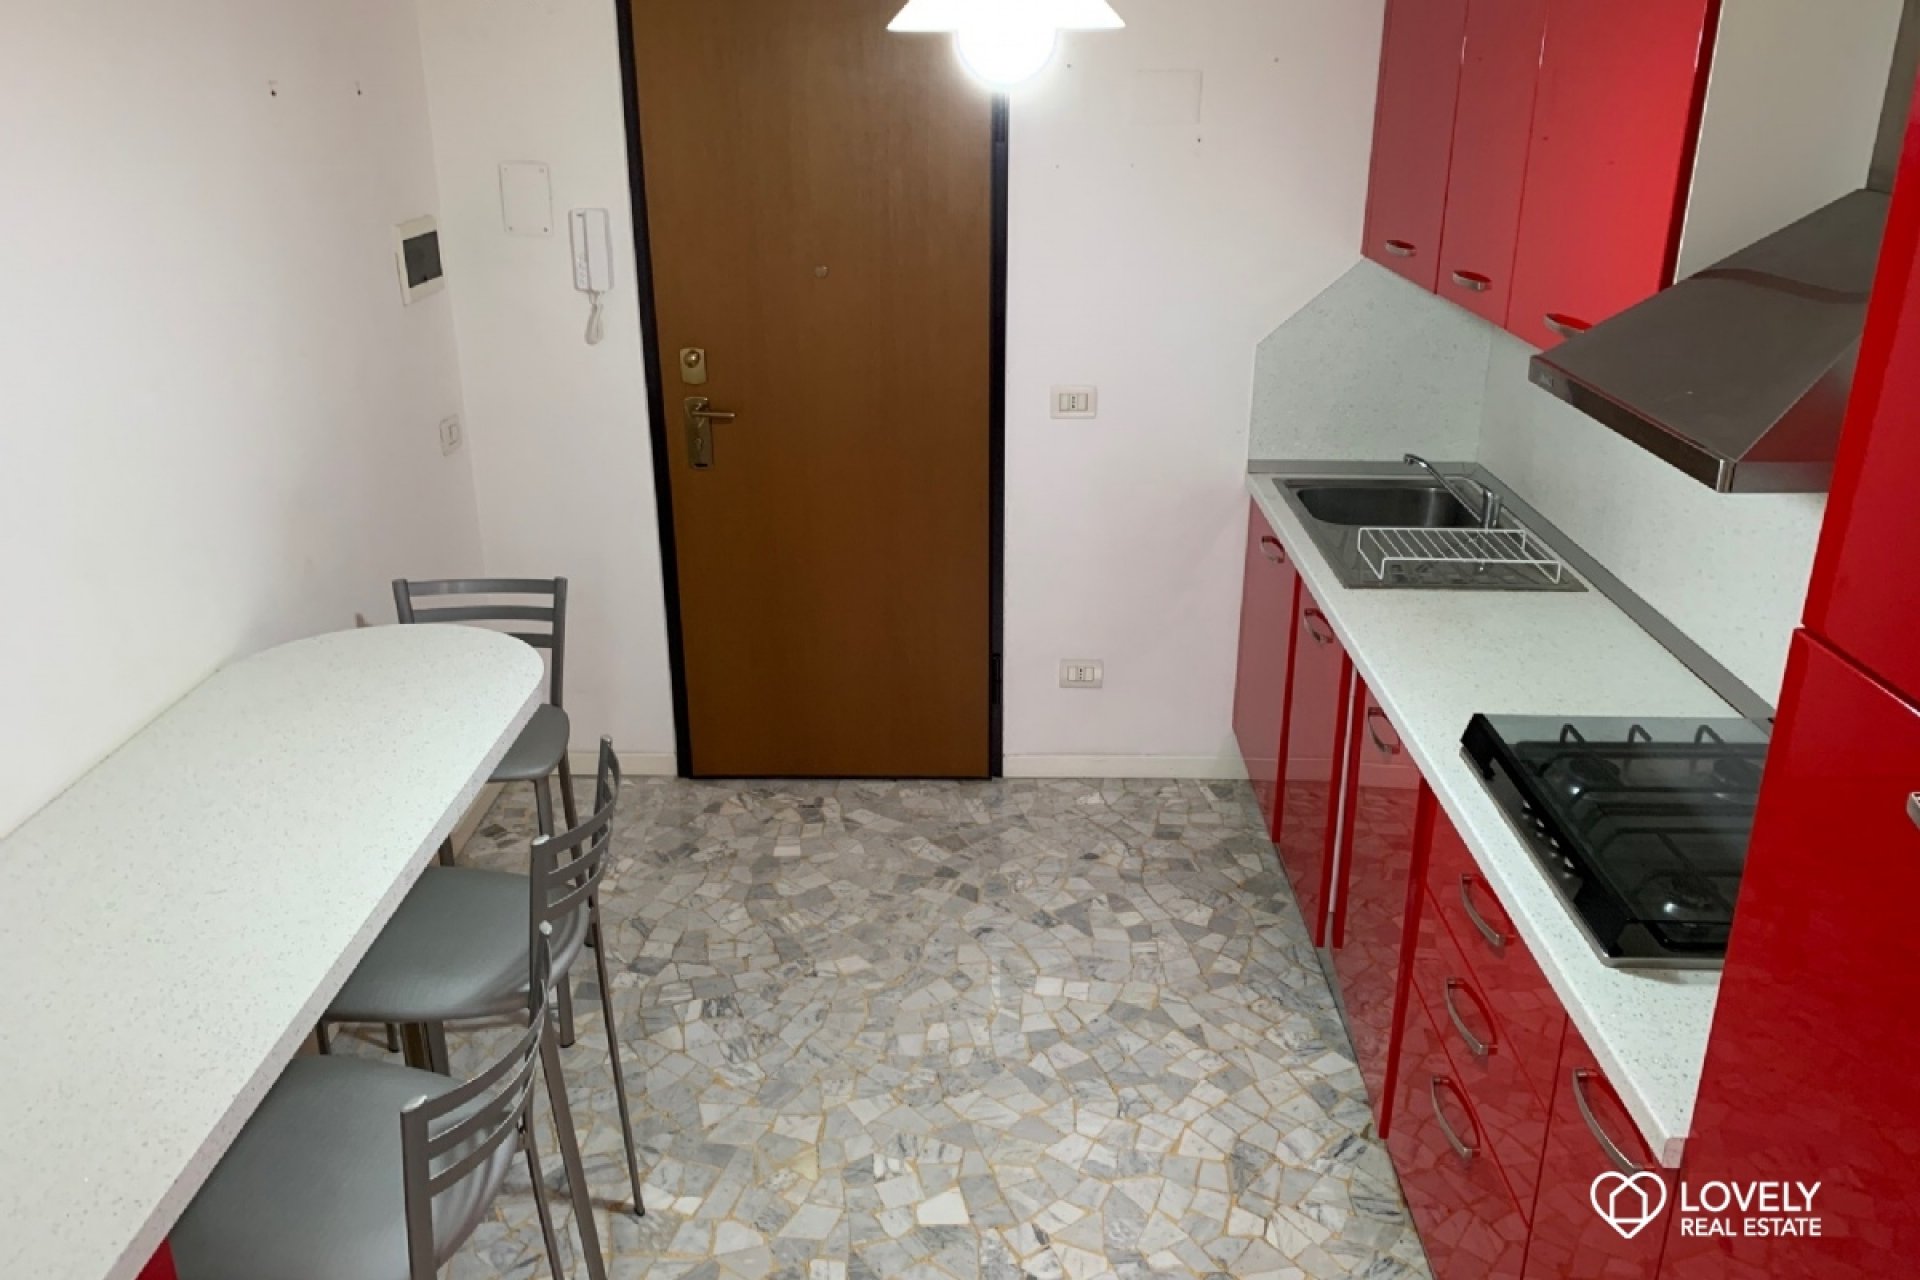 Affitto Apartment Milano - NICE APARTMENT 40 SQM FOR RENT Locality Zara - Maciachini - Lancetti